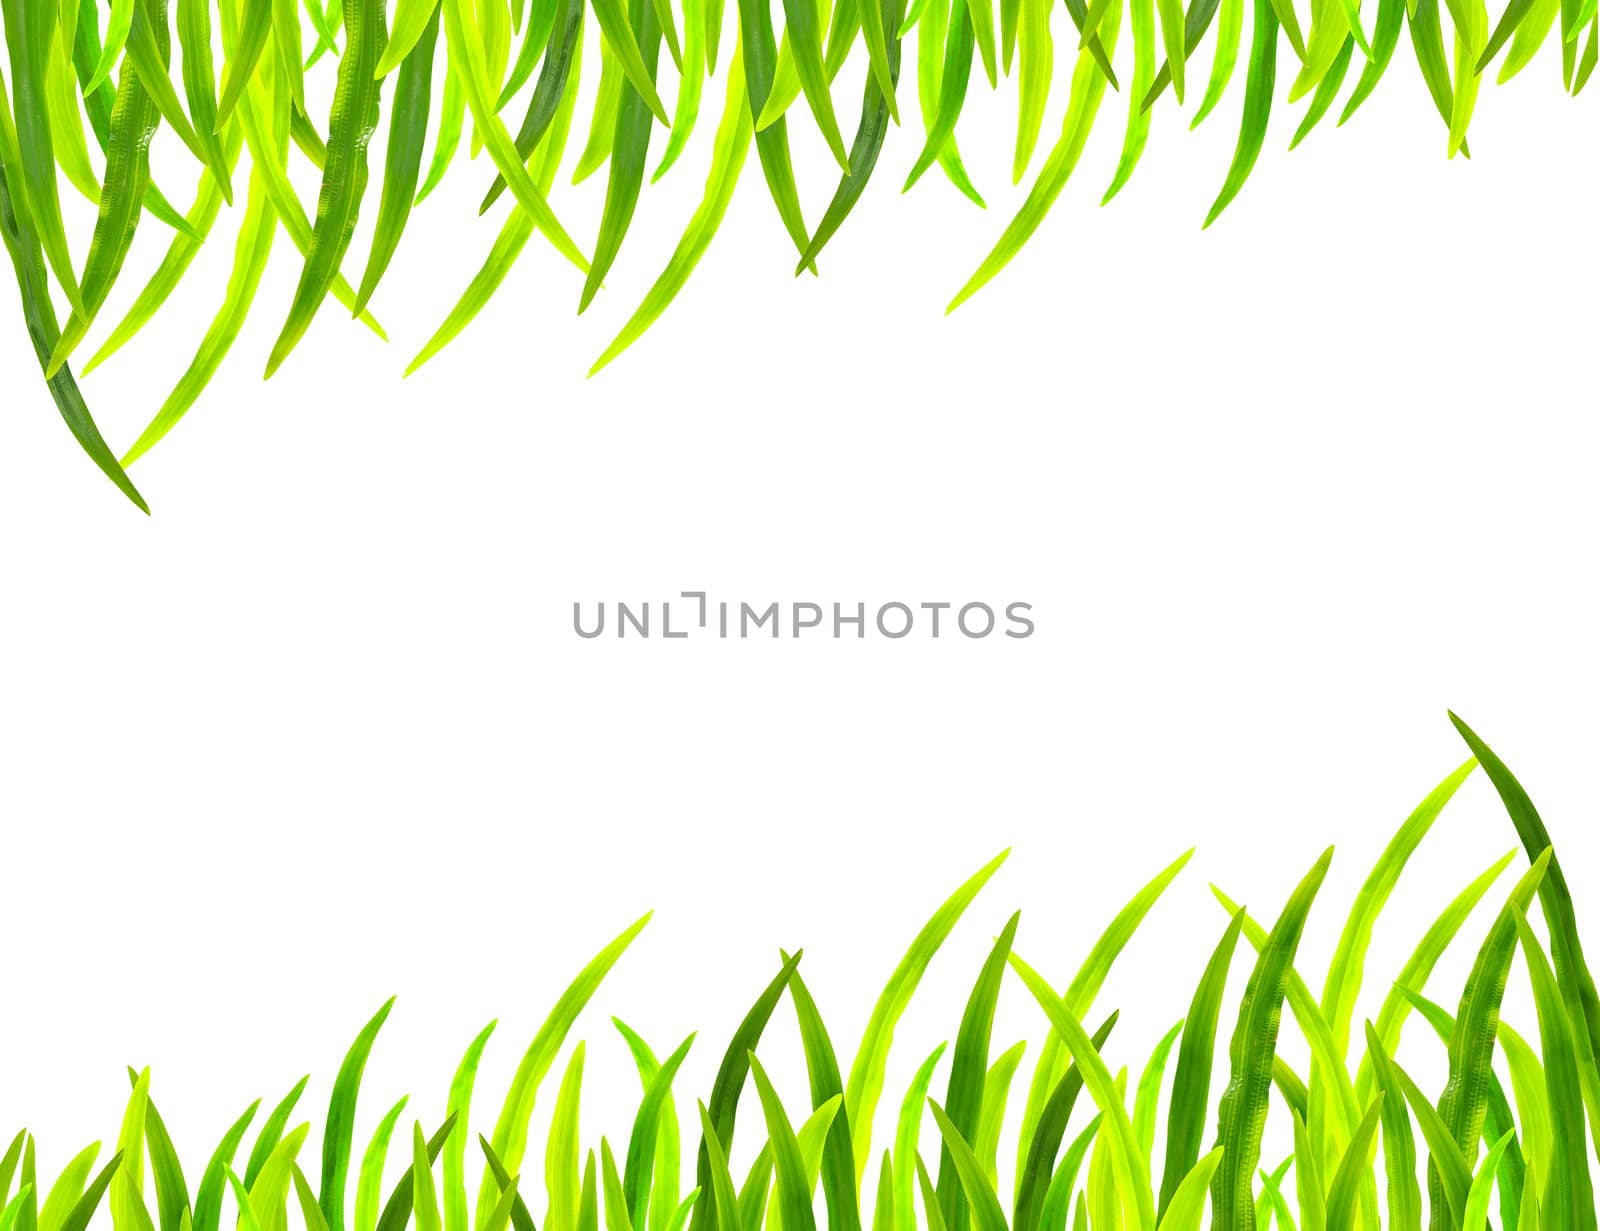 Grass frame in white background by bajita111122